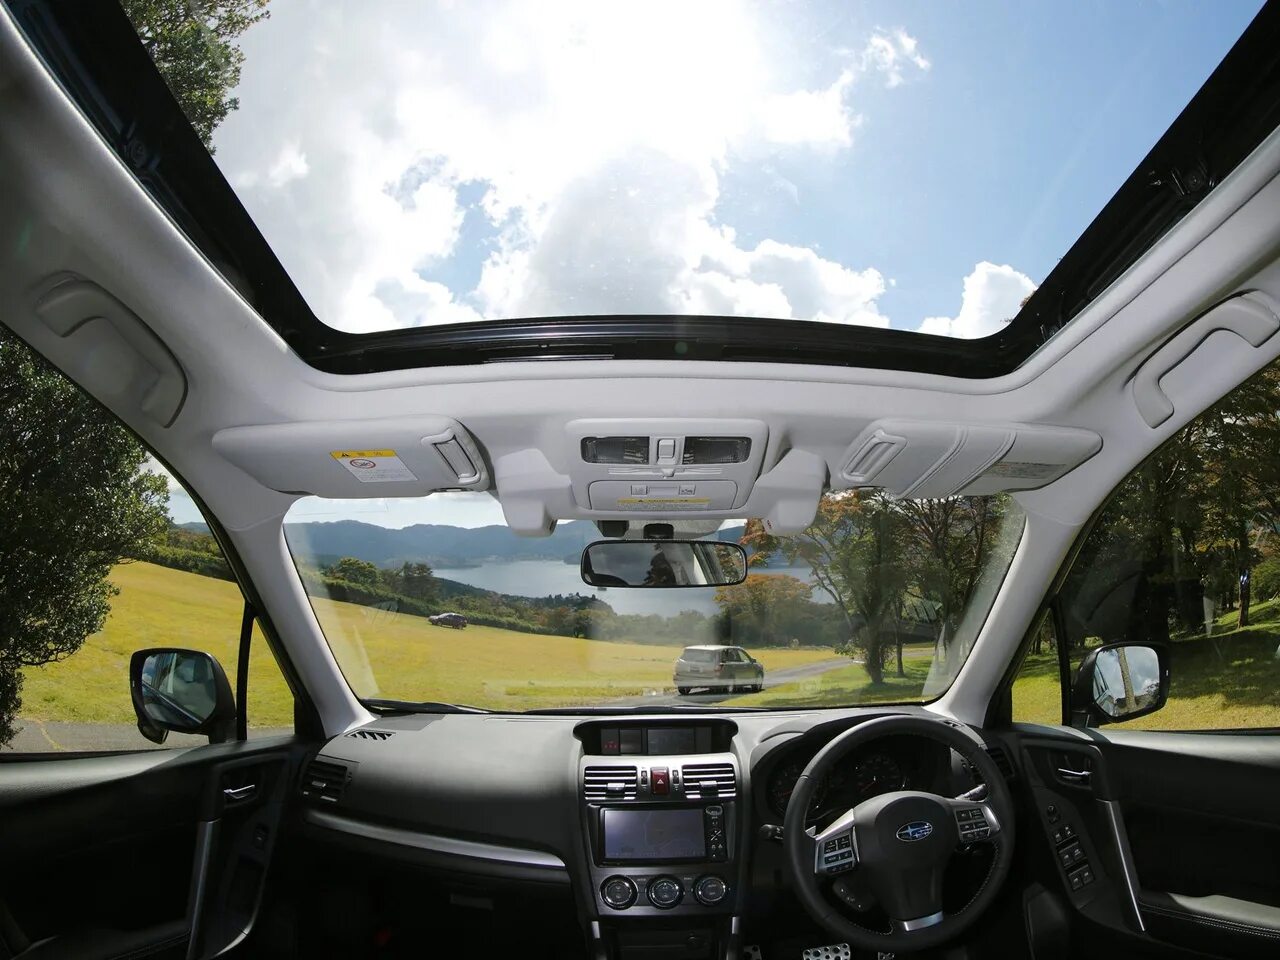 Субару Форестер с панорамной крышей. Форестер sg5 с панорамной крышей. Subaru Forester Panoramic sunroof. Субару Форестер 2006 года с панорамной крышей. Люк форестер